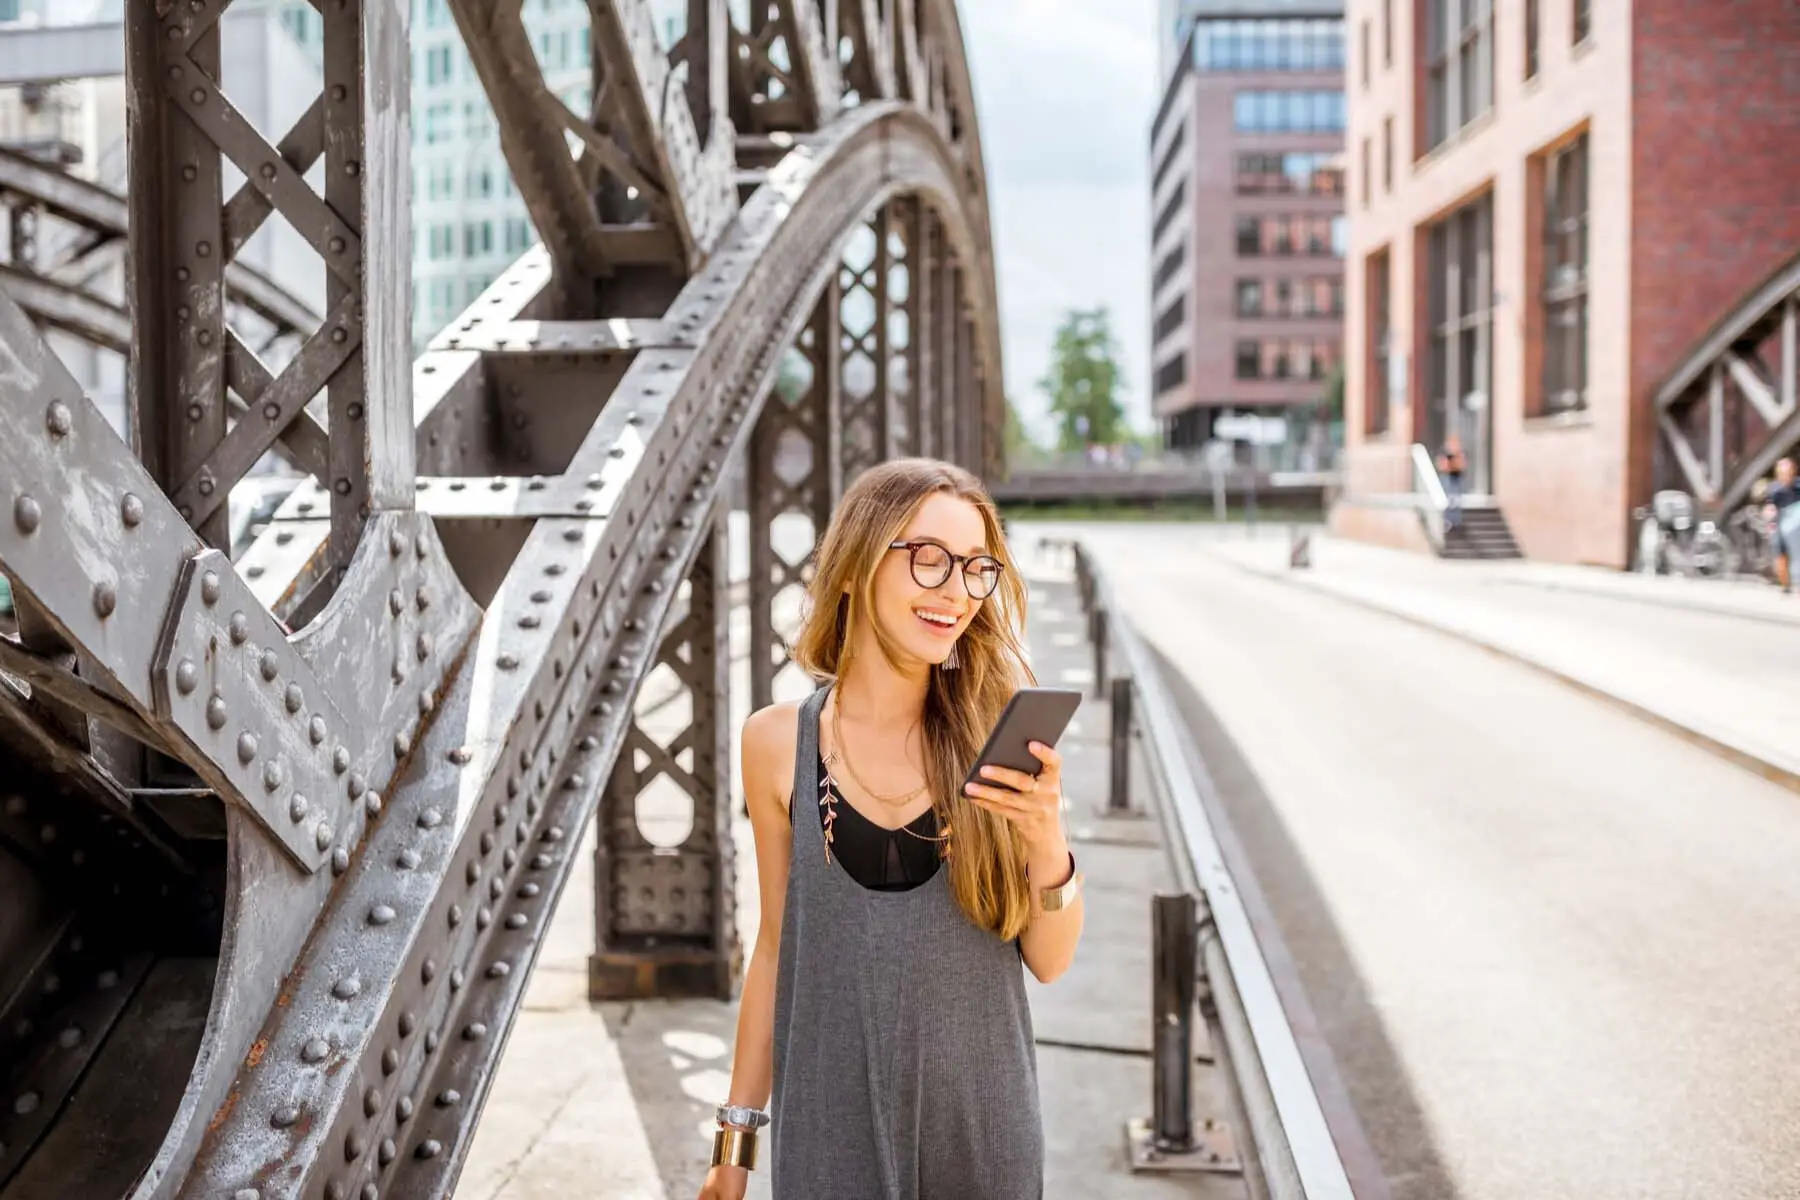 Smiling woman browsing German apps in street